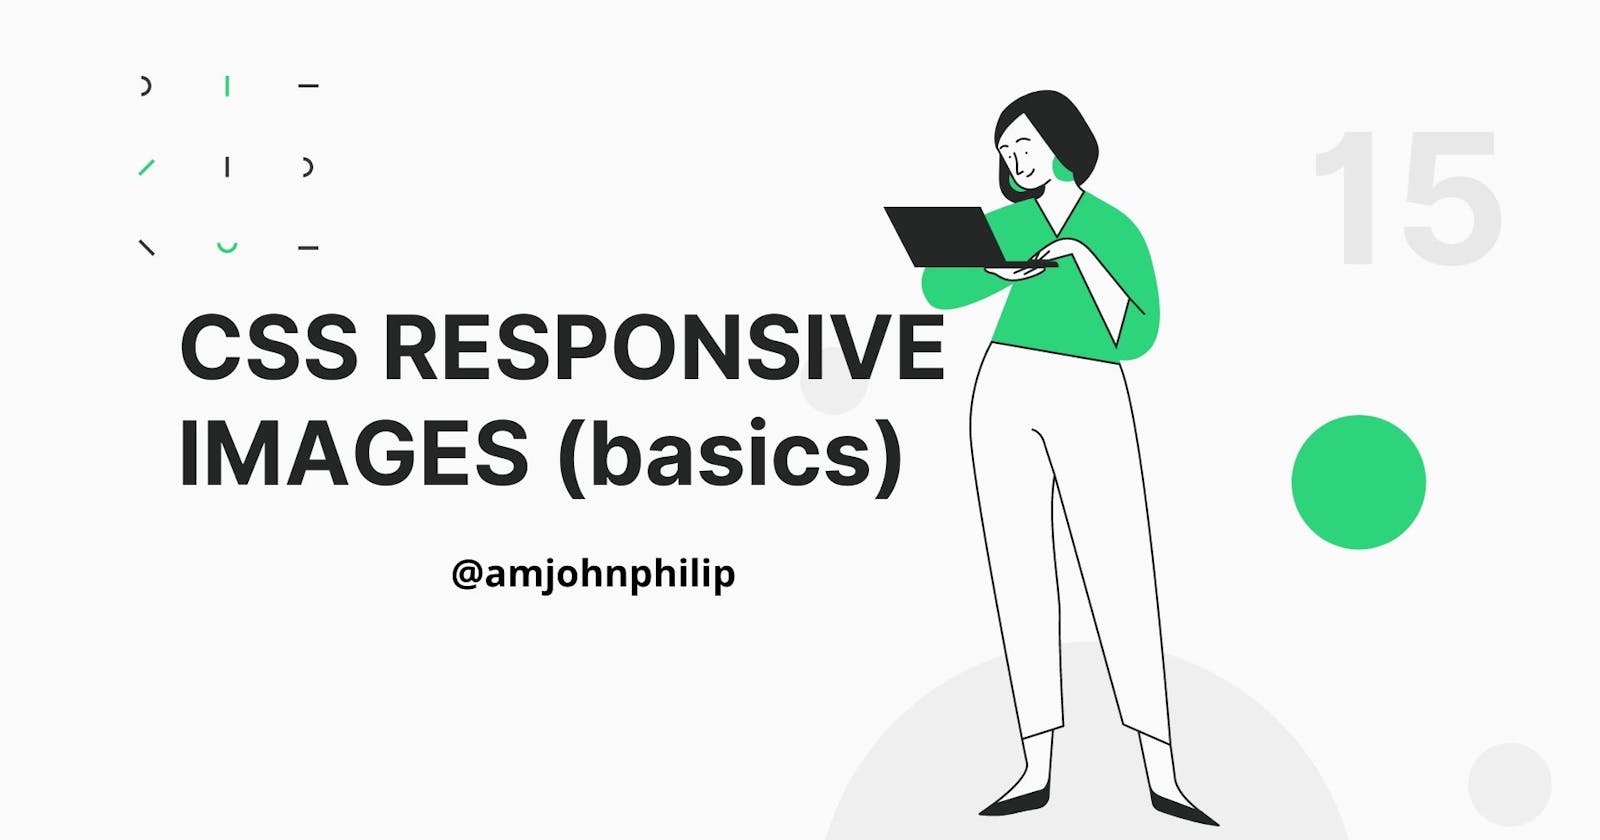 CSS RESPONSIVE IMAGES (basics)